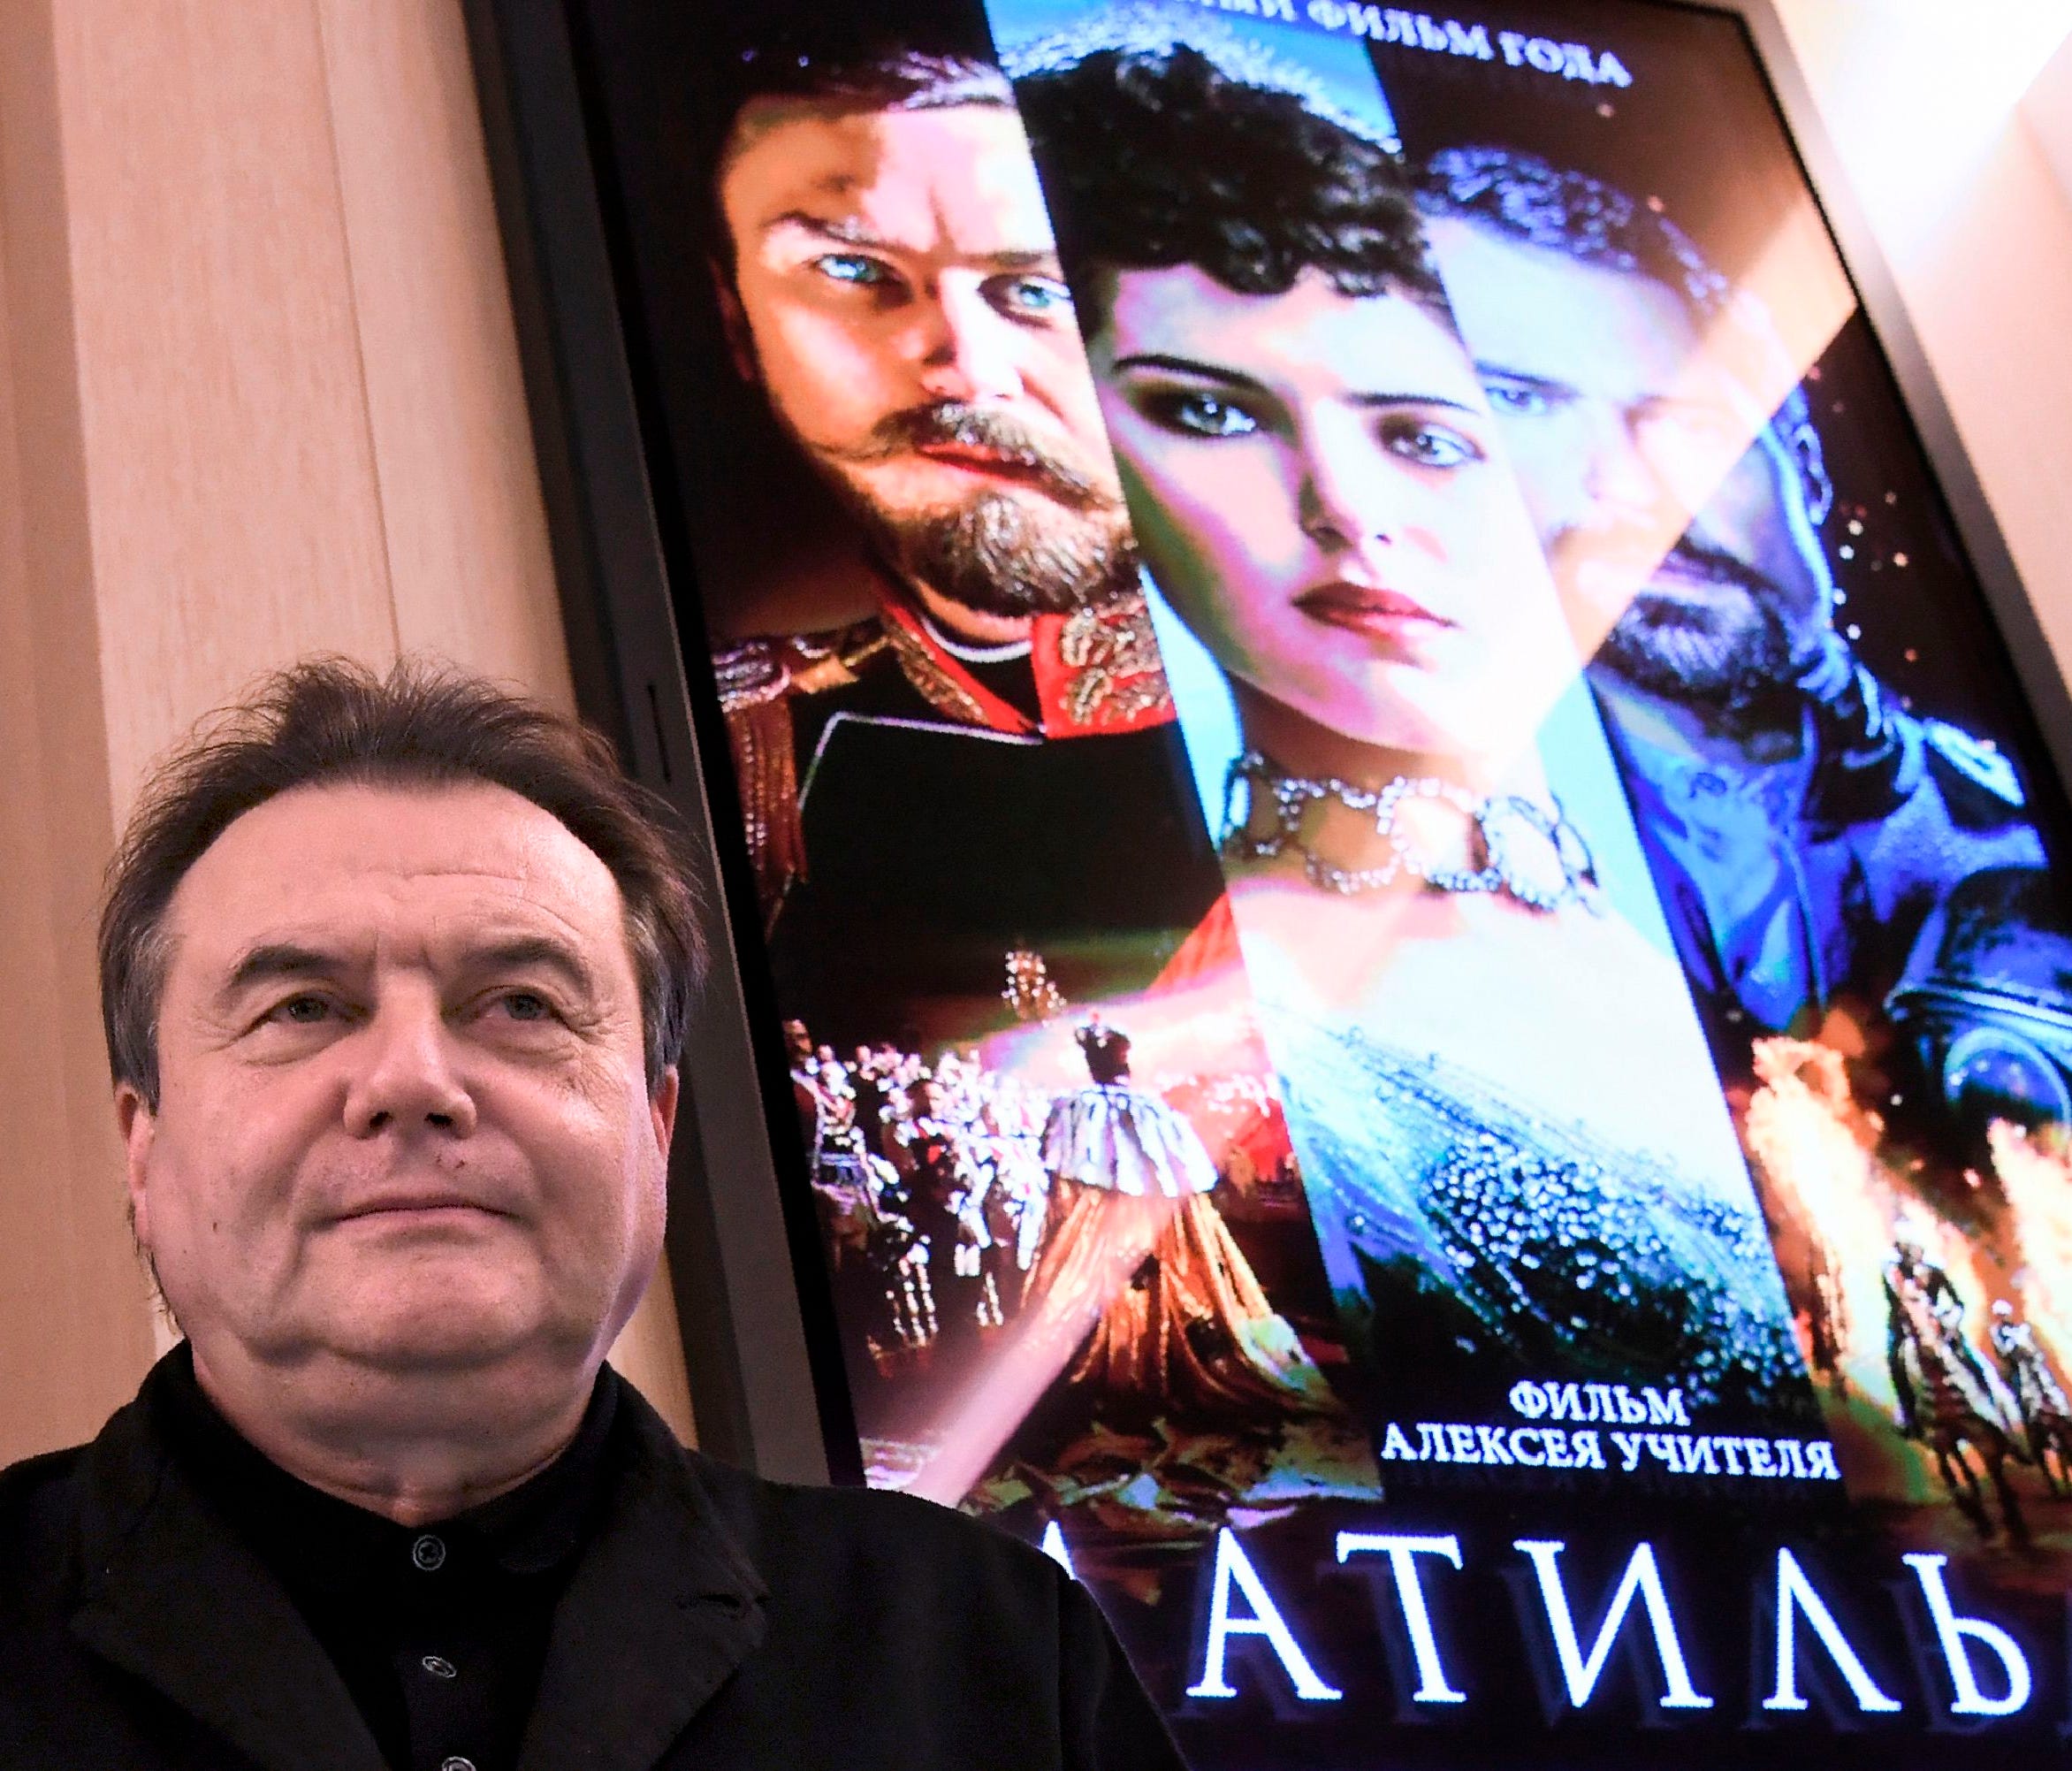 Russian film director Alexei Uchitel waits during the press screening of his 